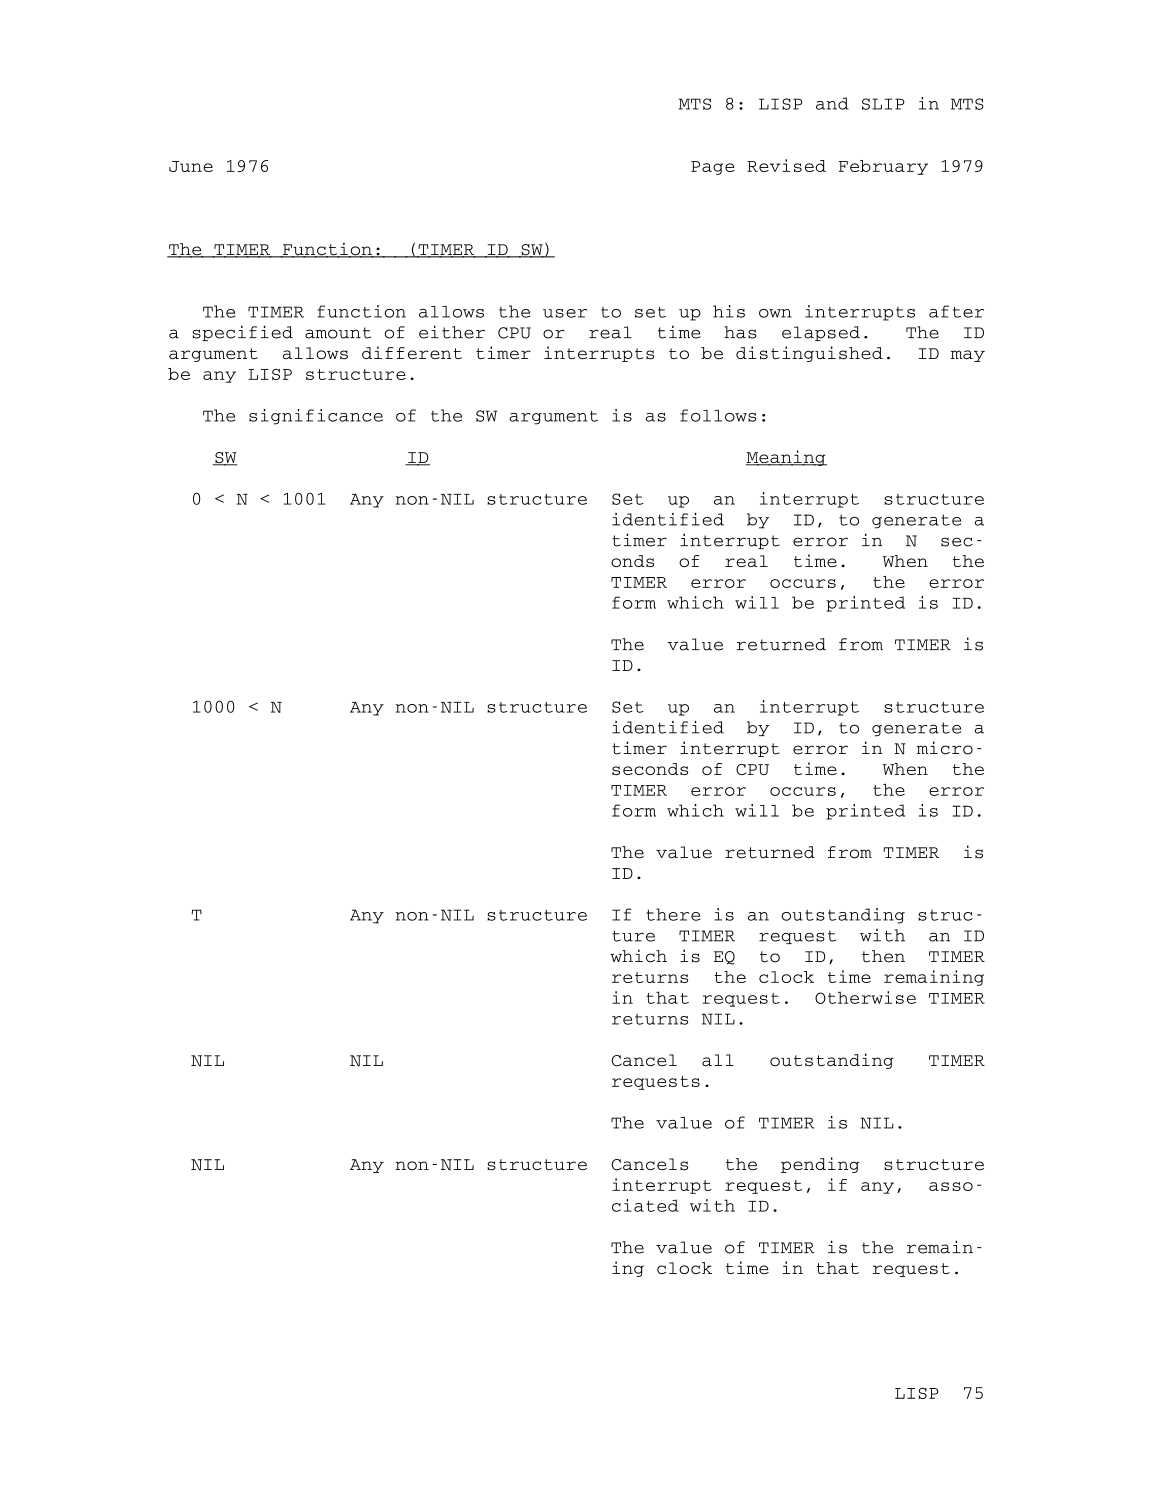 MTS Volume 8 - LISP and SLIP page 74